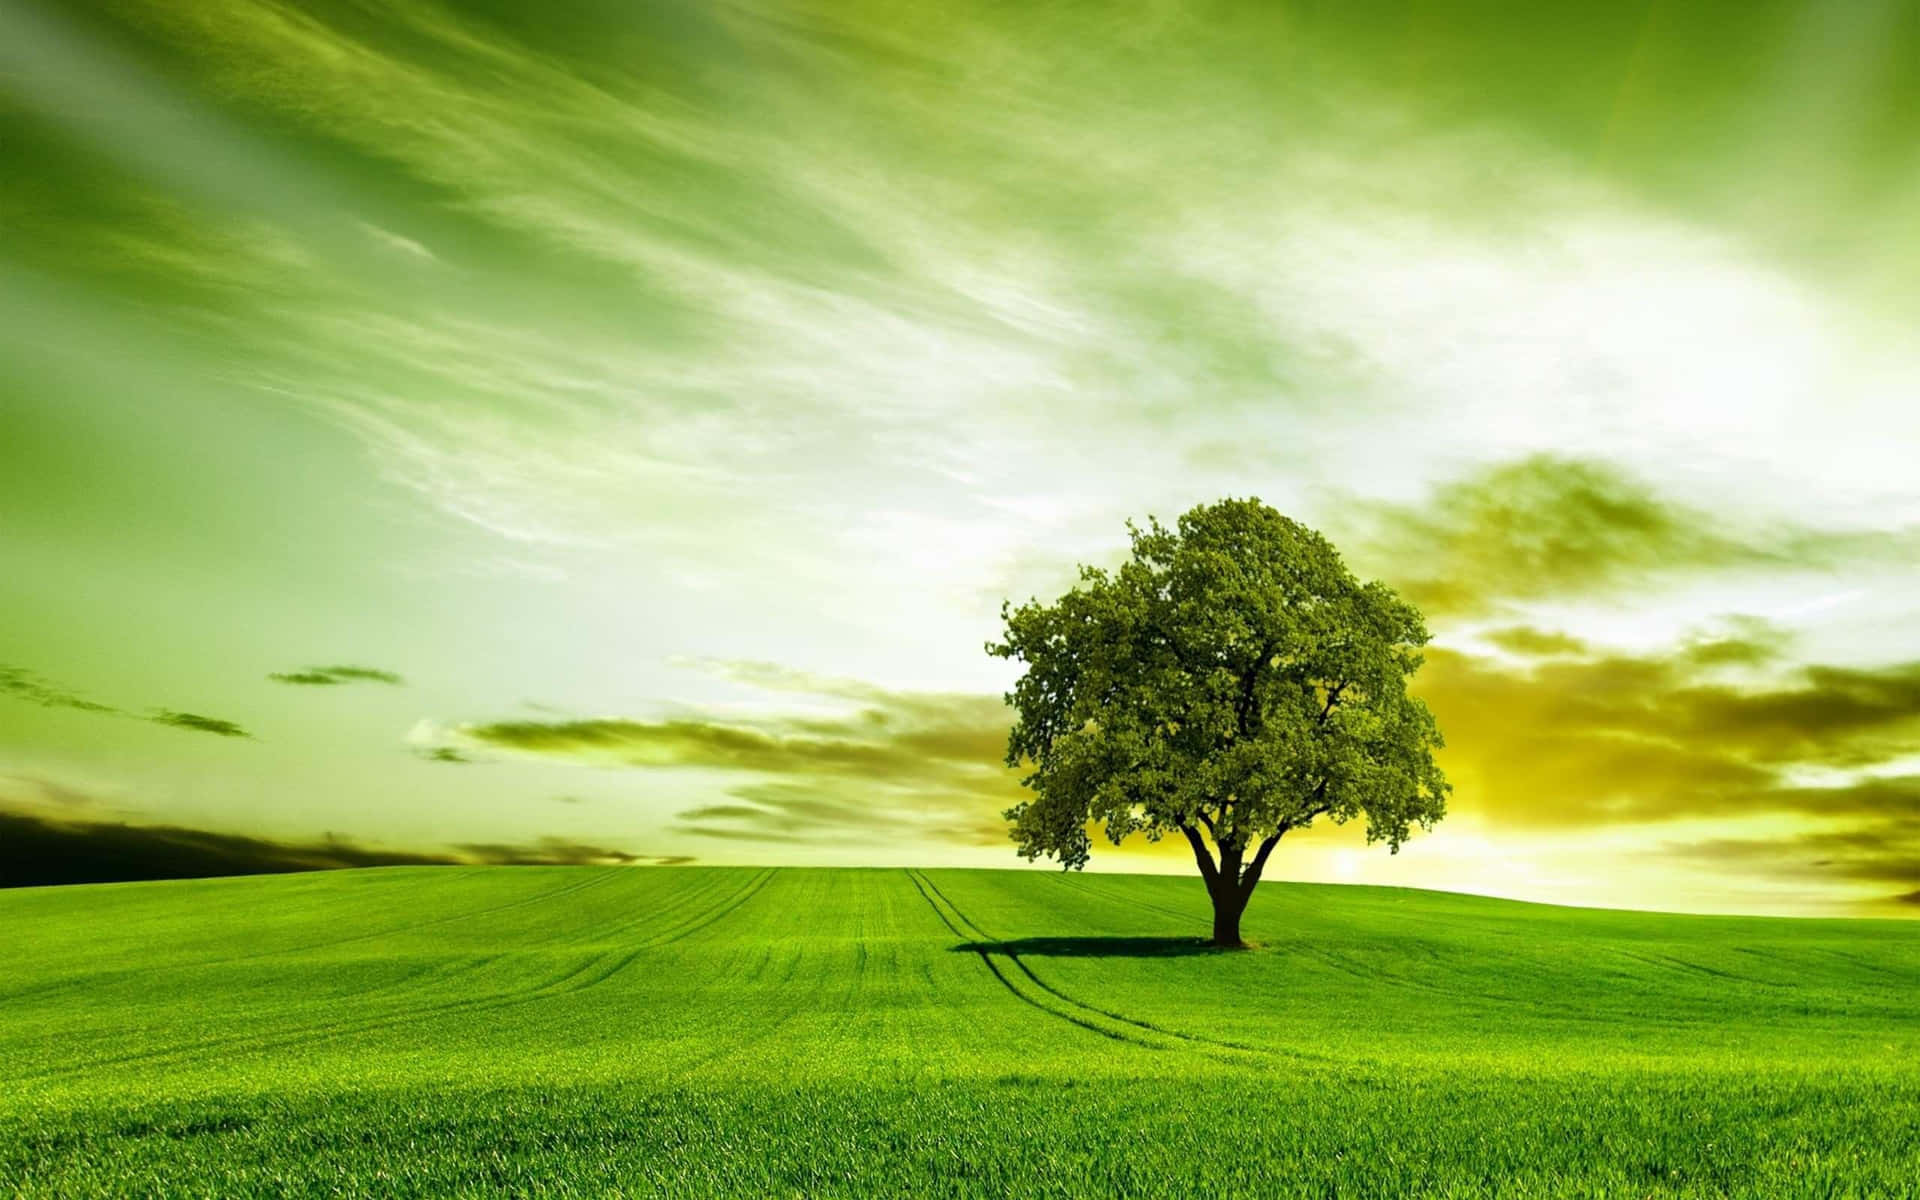 A lush, green tree against a vibrant blue sky